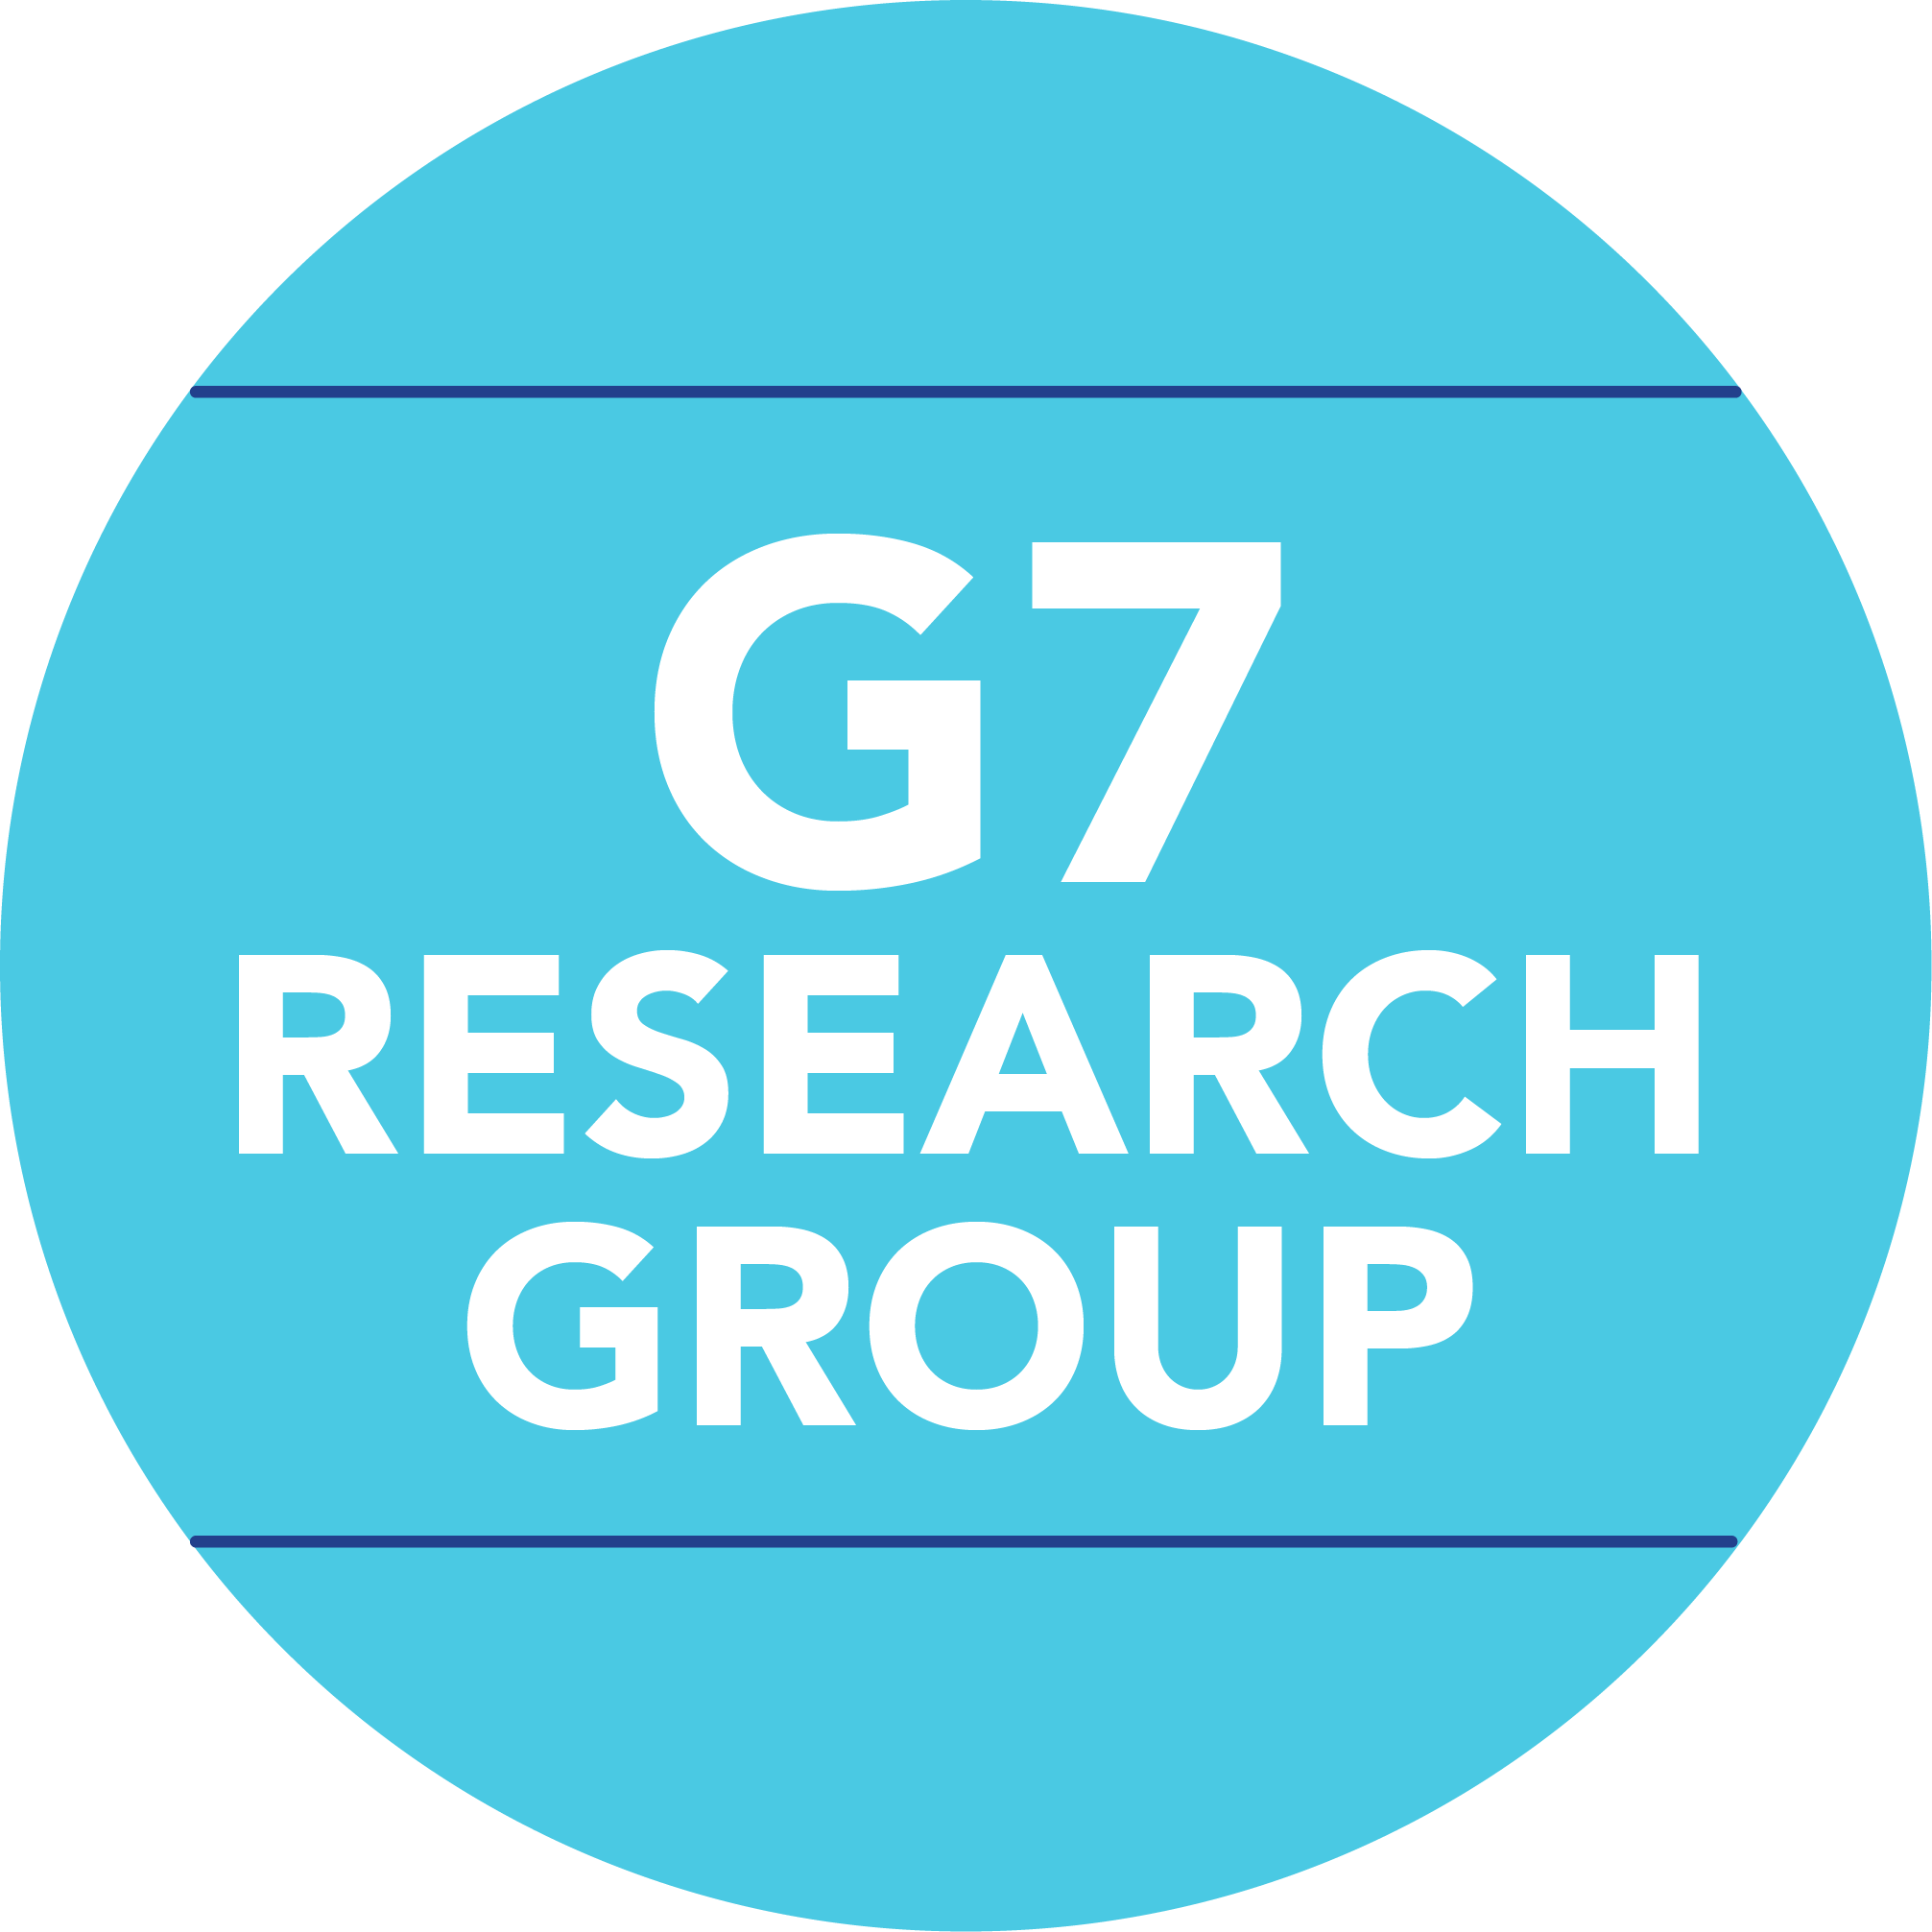 G7 Science Academies present three statements in Rome